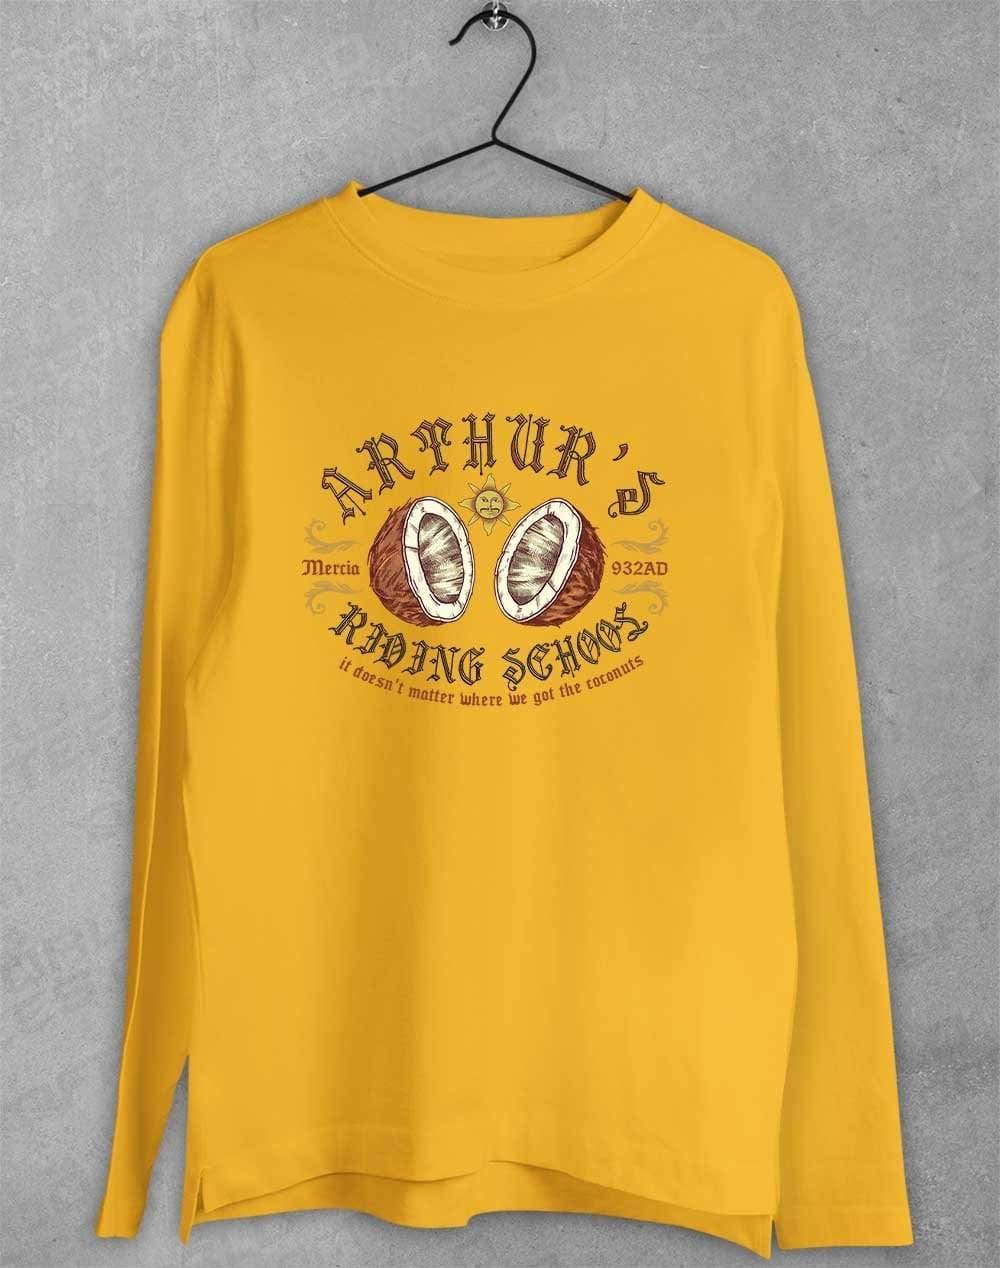 King Arthur's Riding School Long Sleeve T-Shirt S / Gold  - Off World Tees